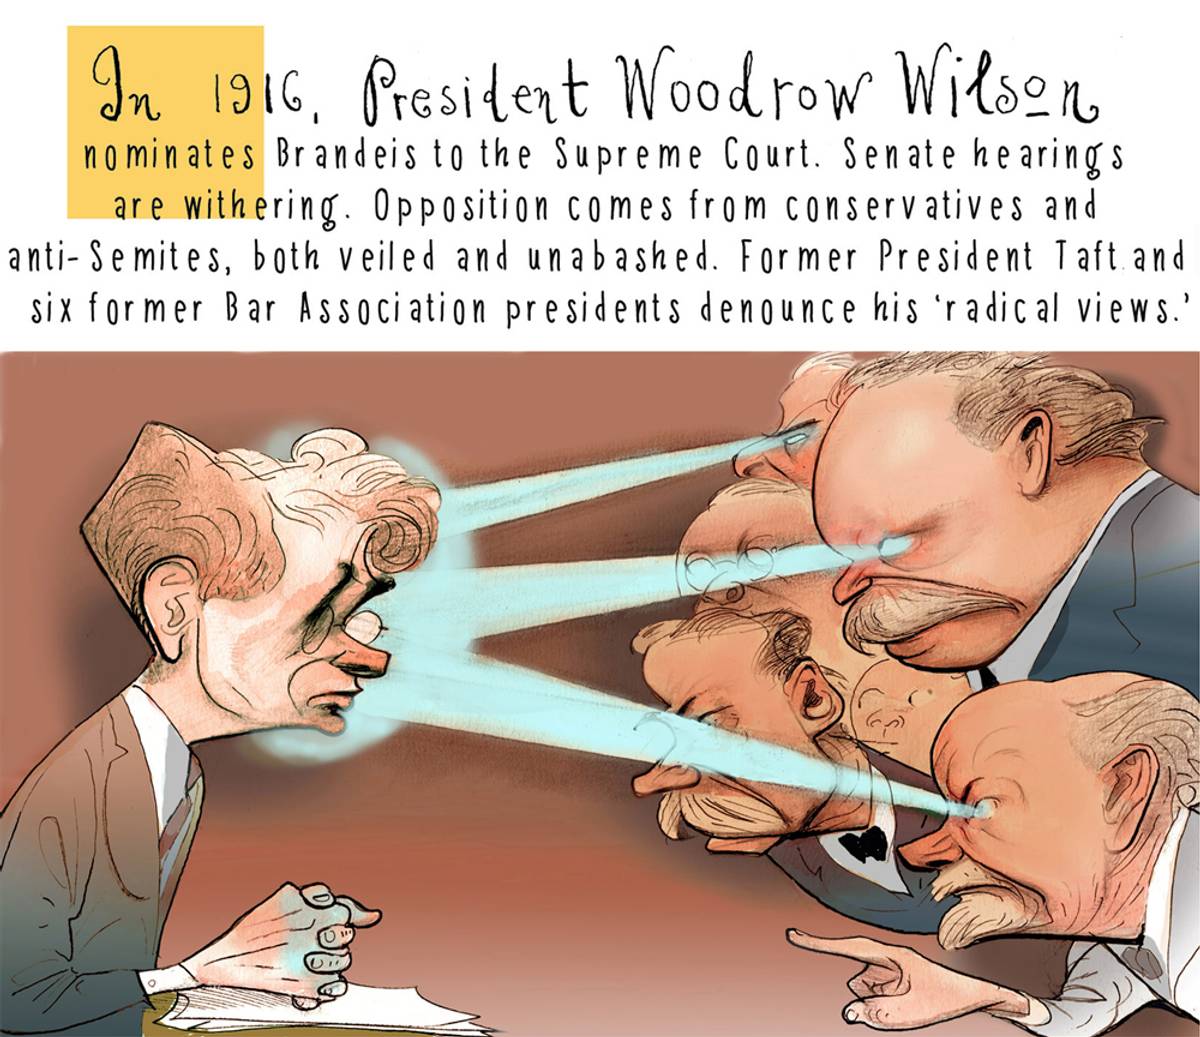 Editorial Cartoons About Louis D. Brandeis